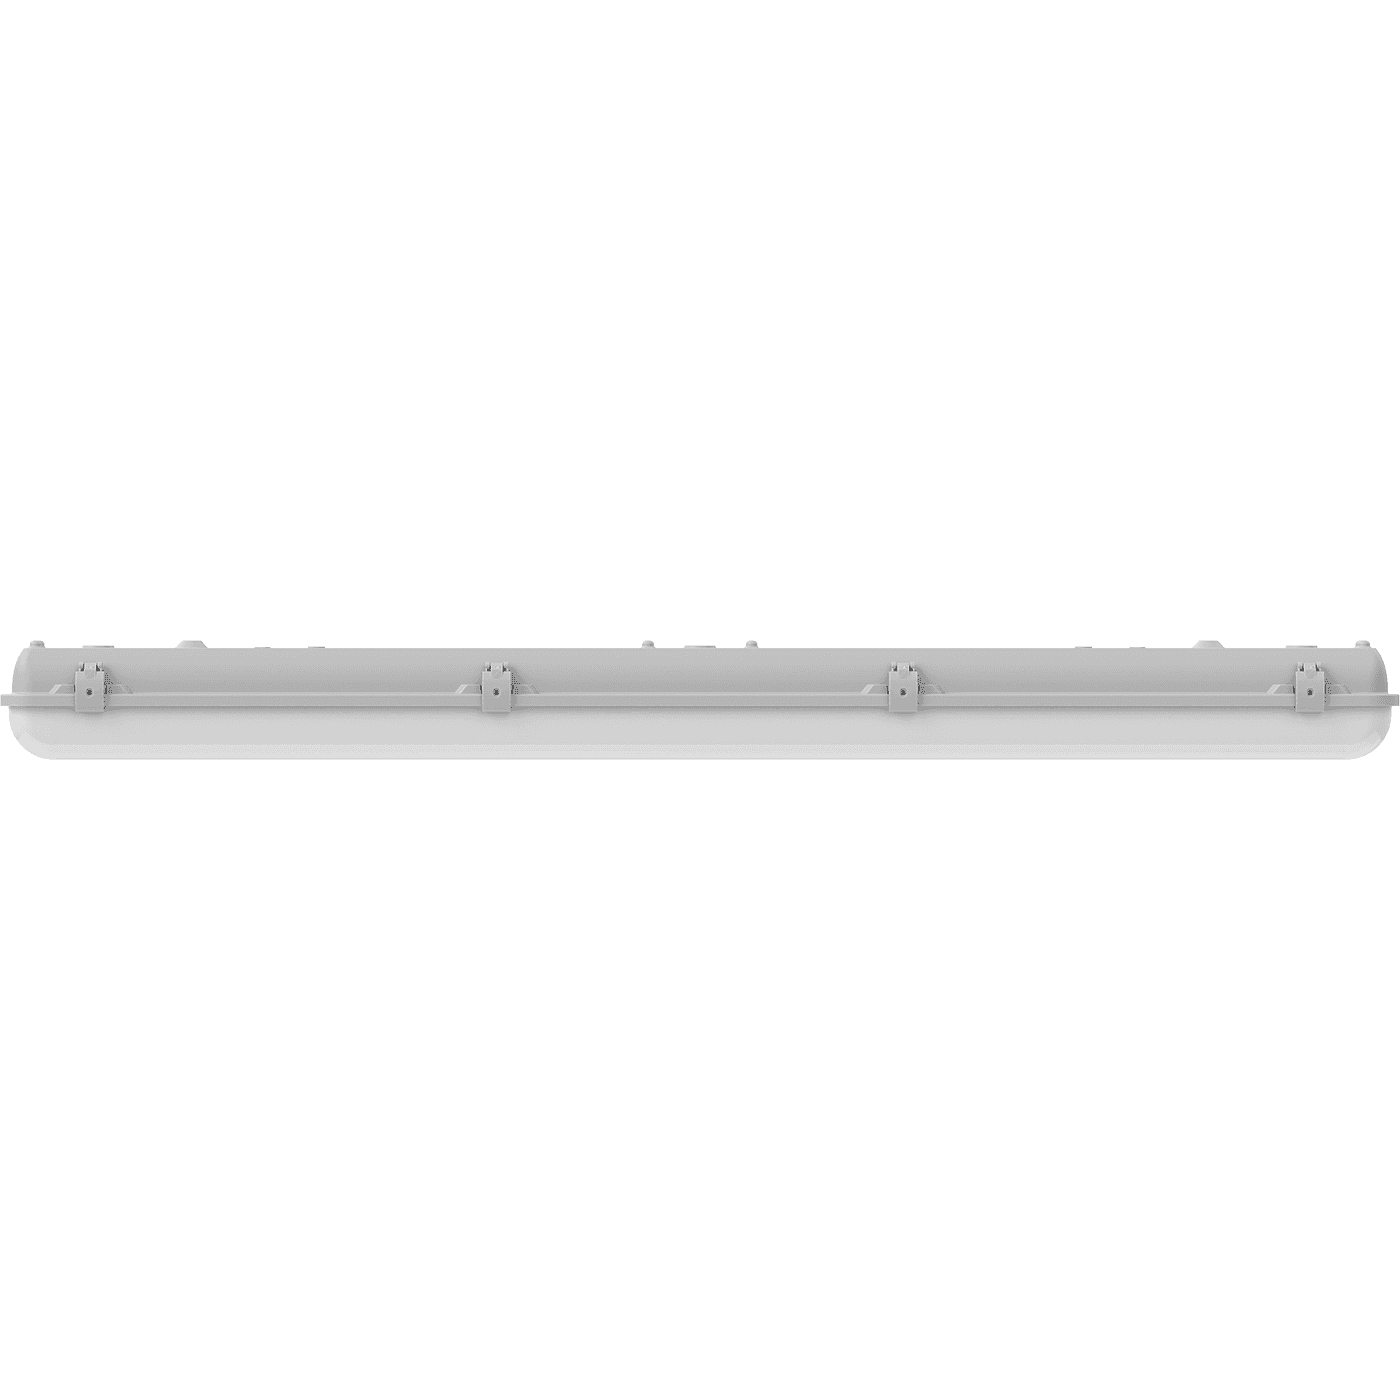 ламповые ARCTIC 136 (PC/SMC) HF, артикул 1069000090